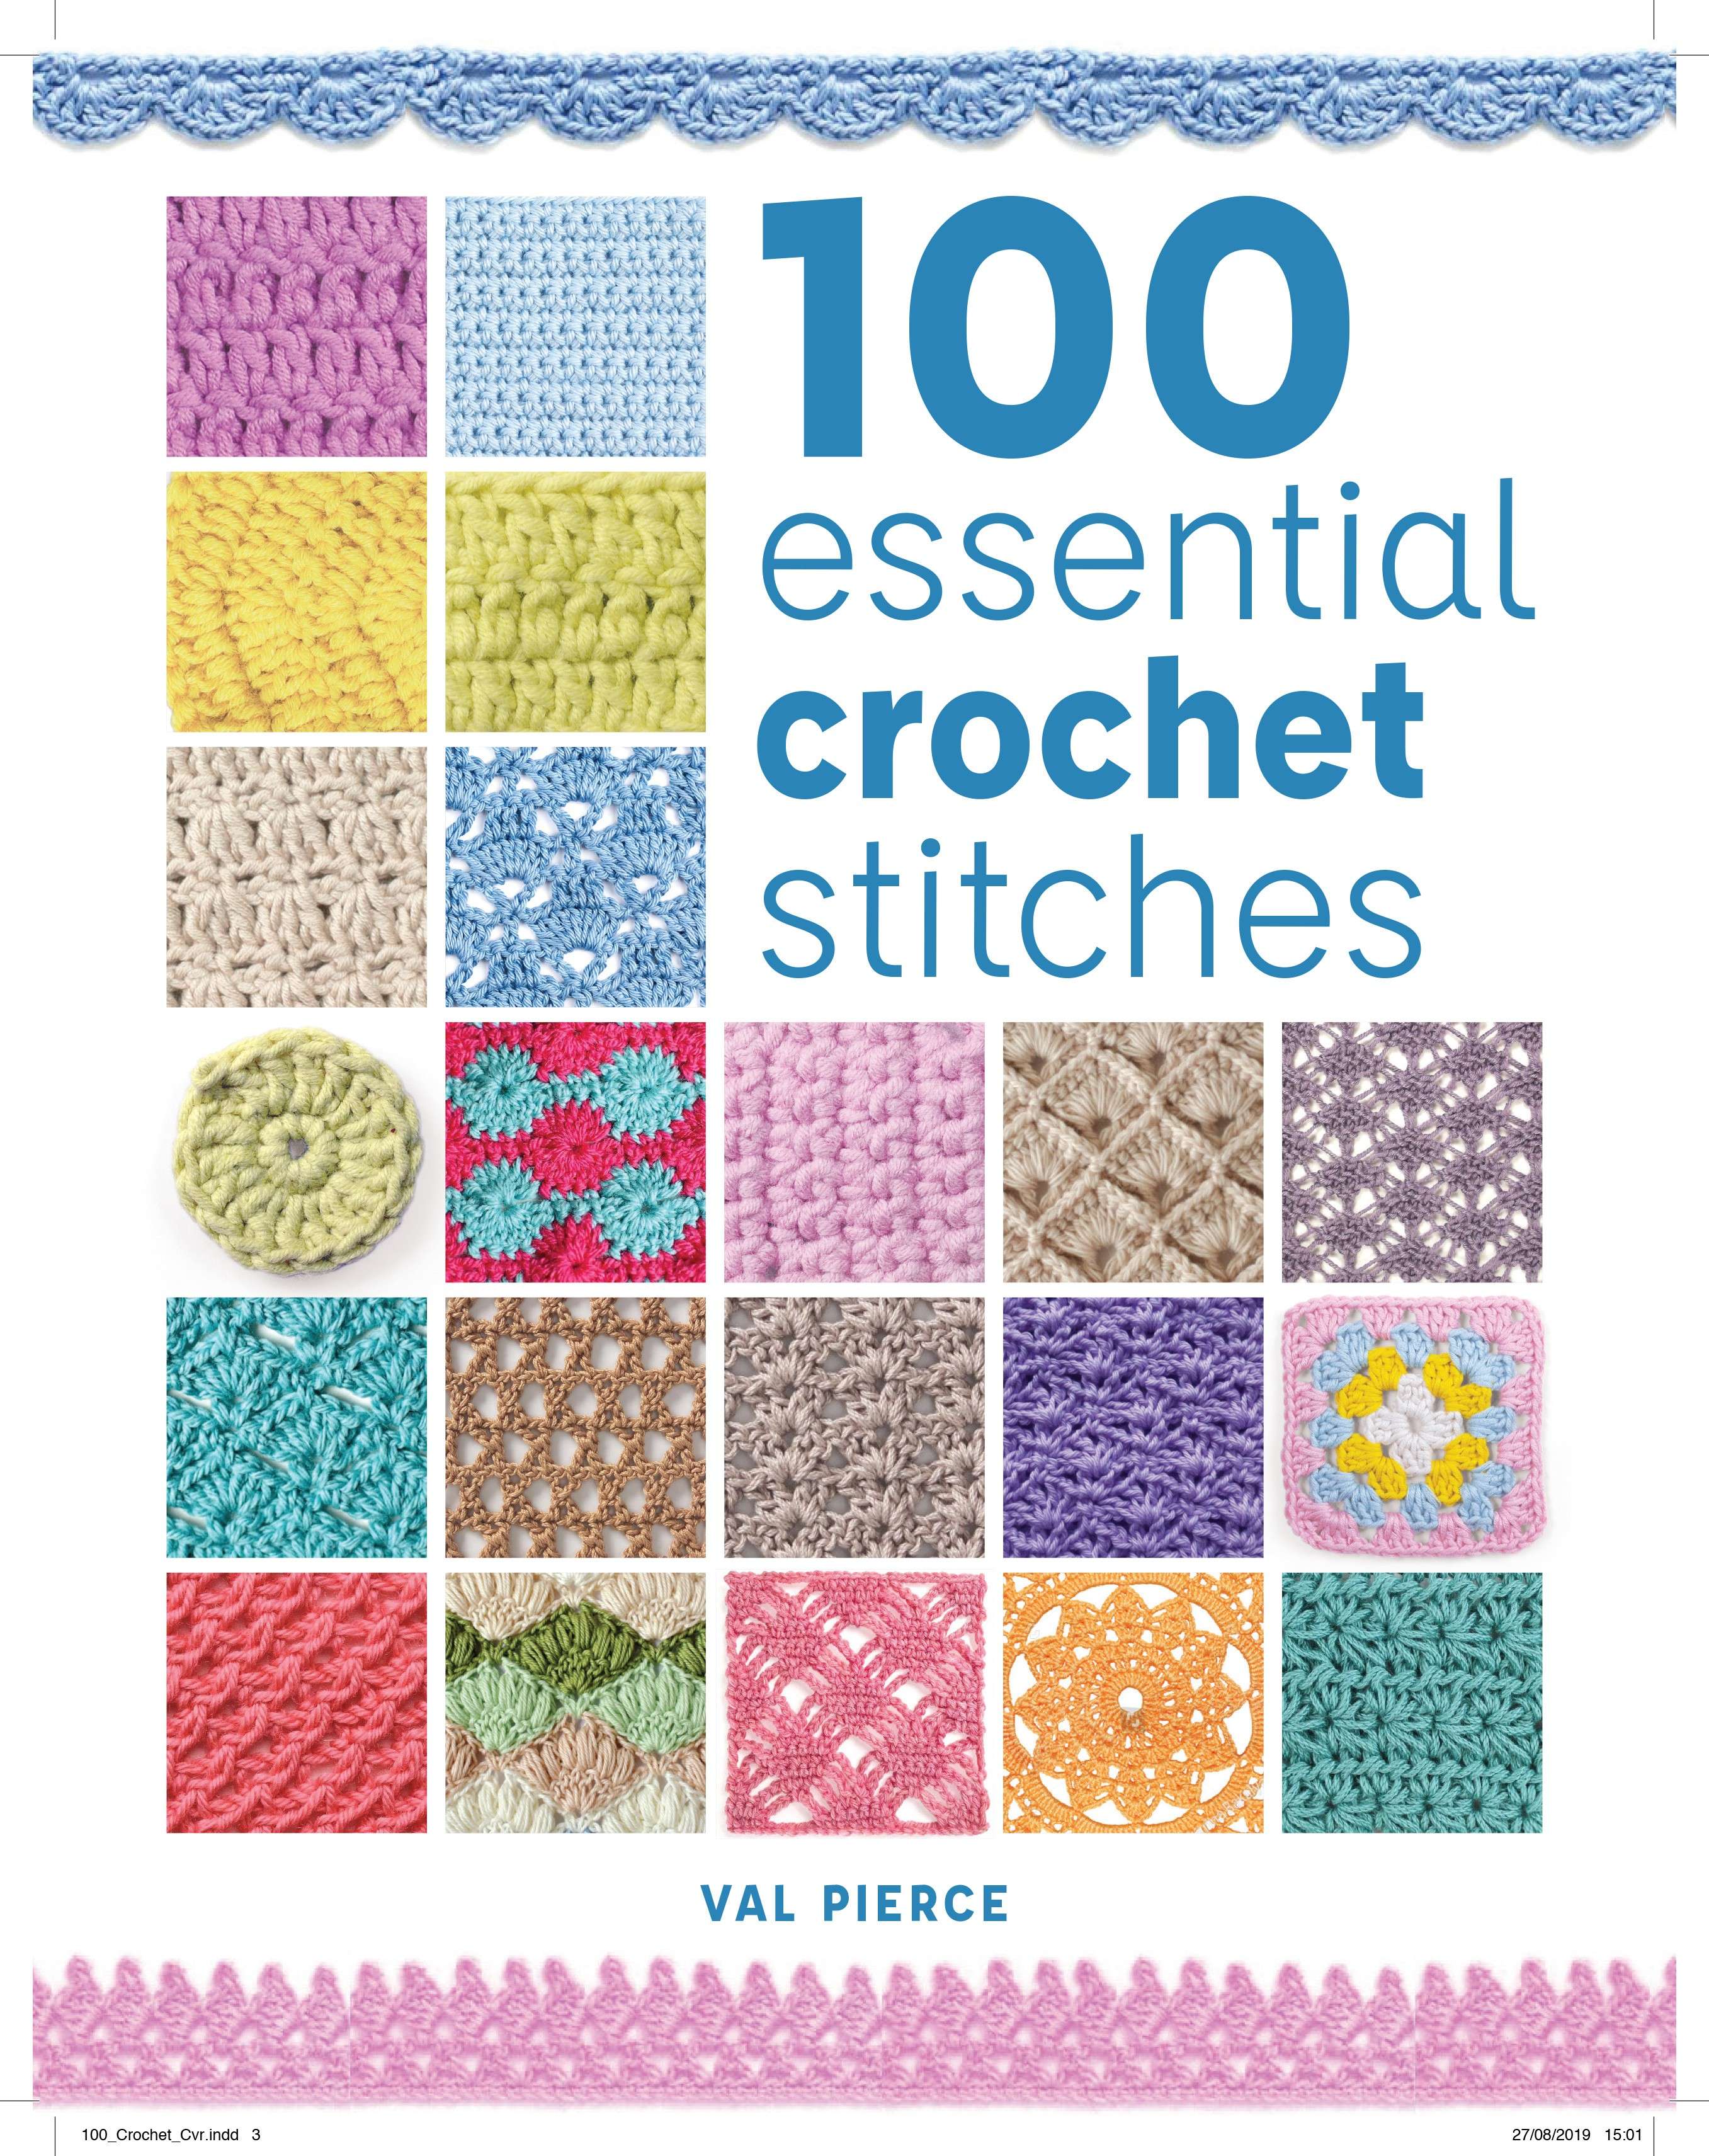 The Big Book of Crochet Stitches [Book]